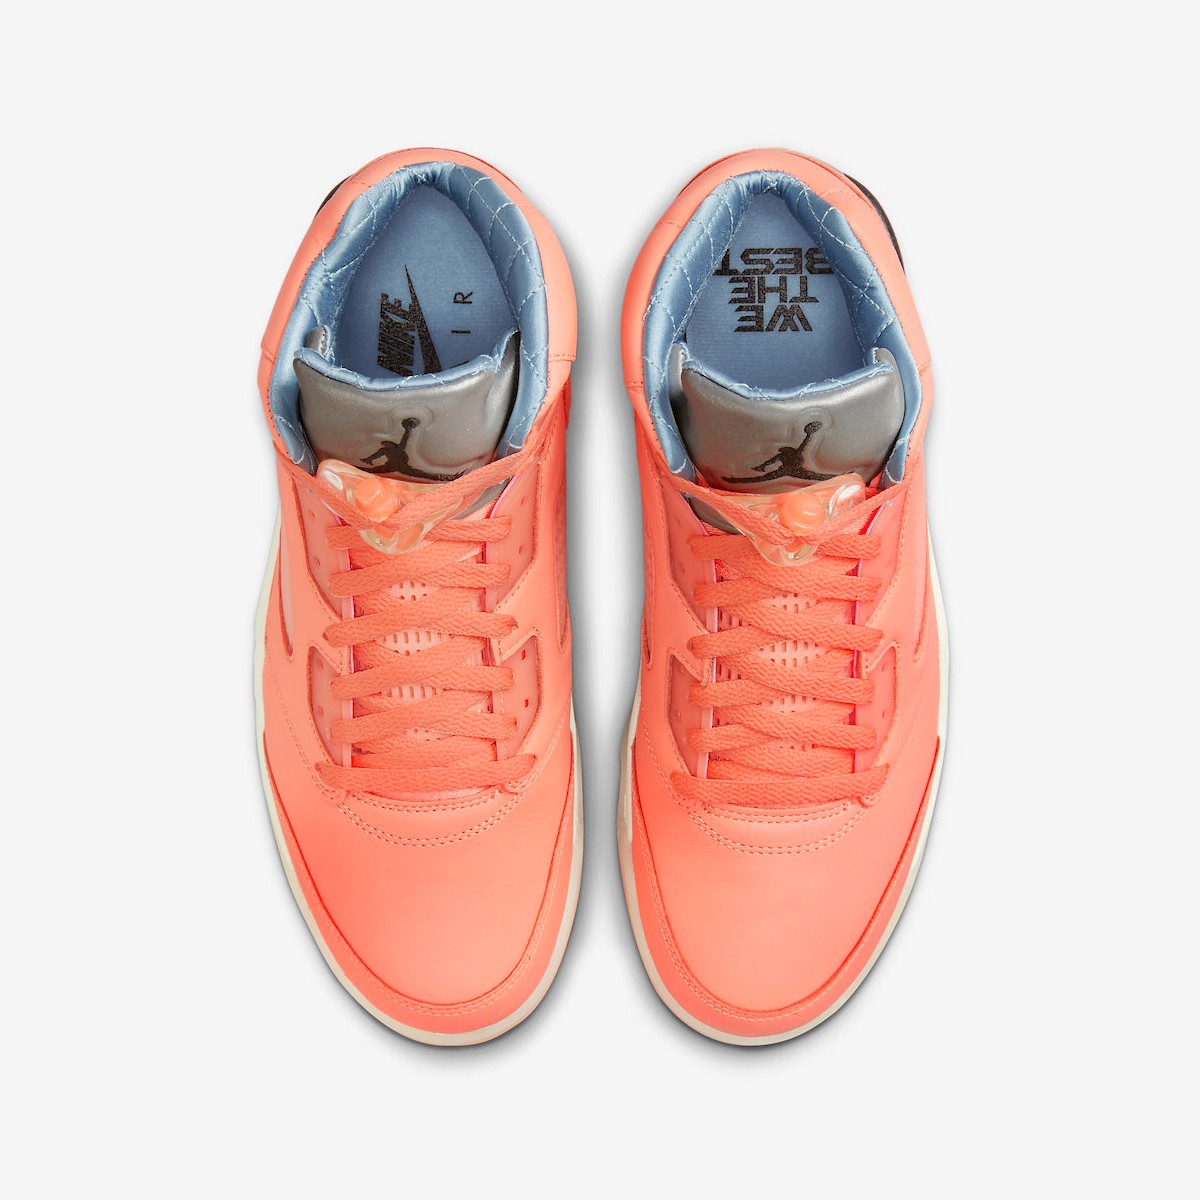 DJ Khaled x Nike Air Jordan 5 We The Best Crimson Bliss